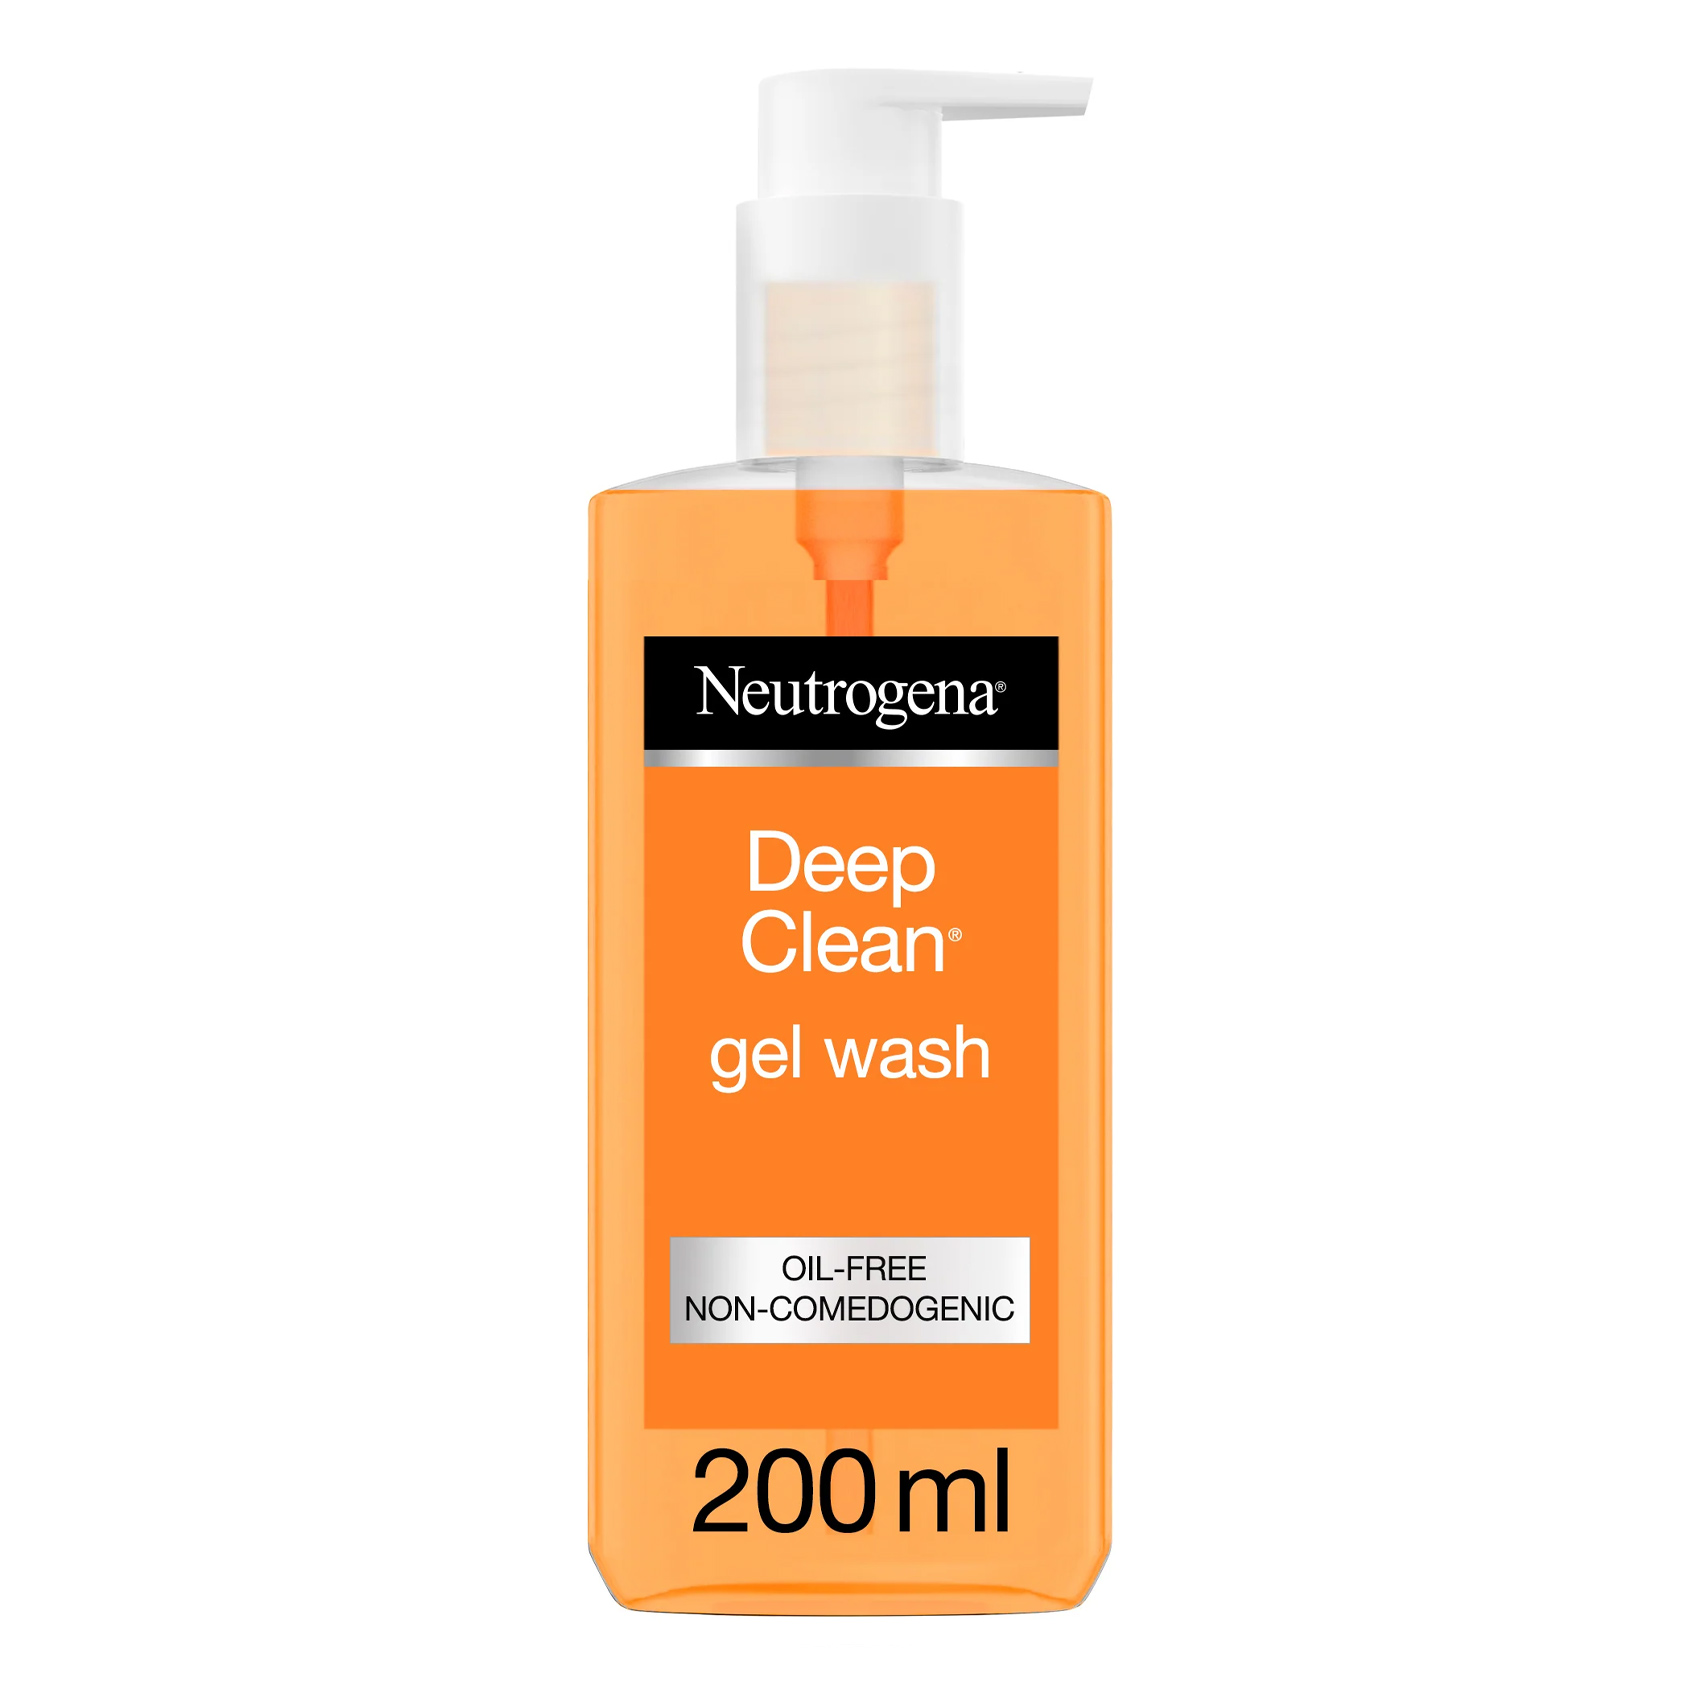 Neutrogena Deep Clean Gel Wash 200ML -20% Off